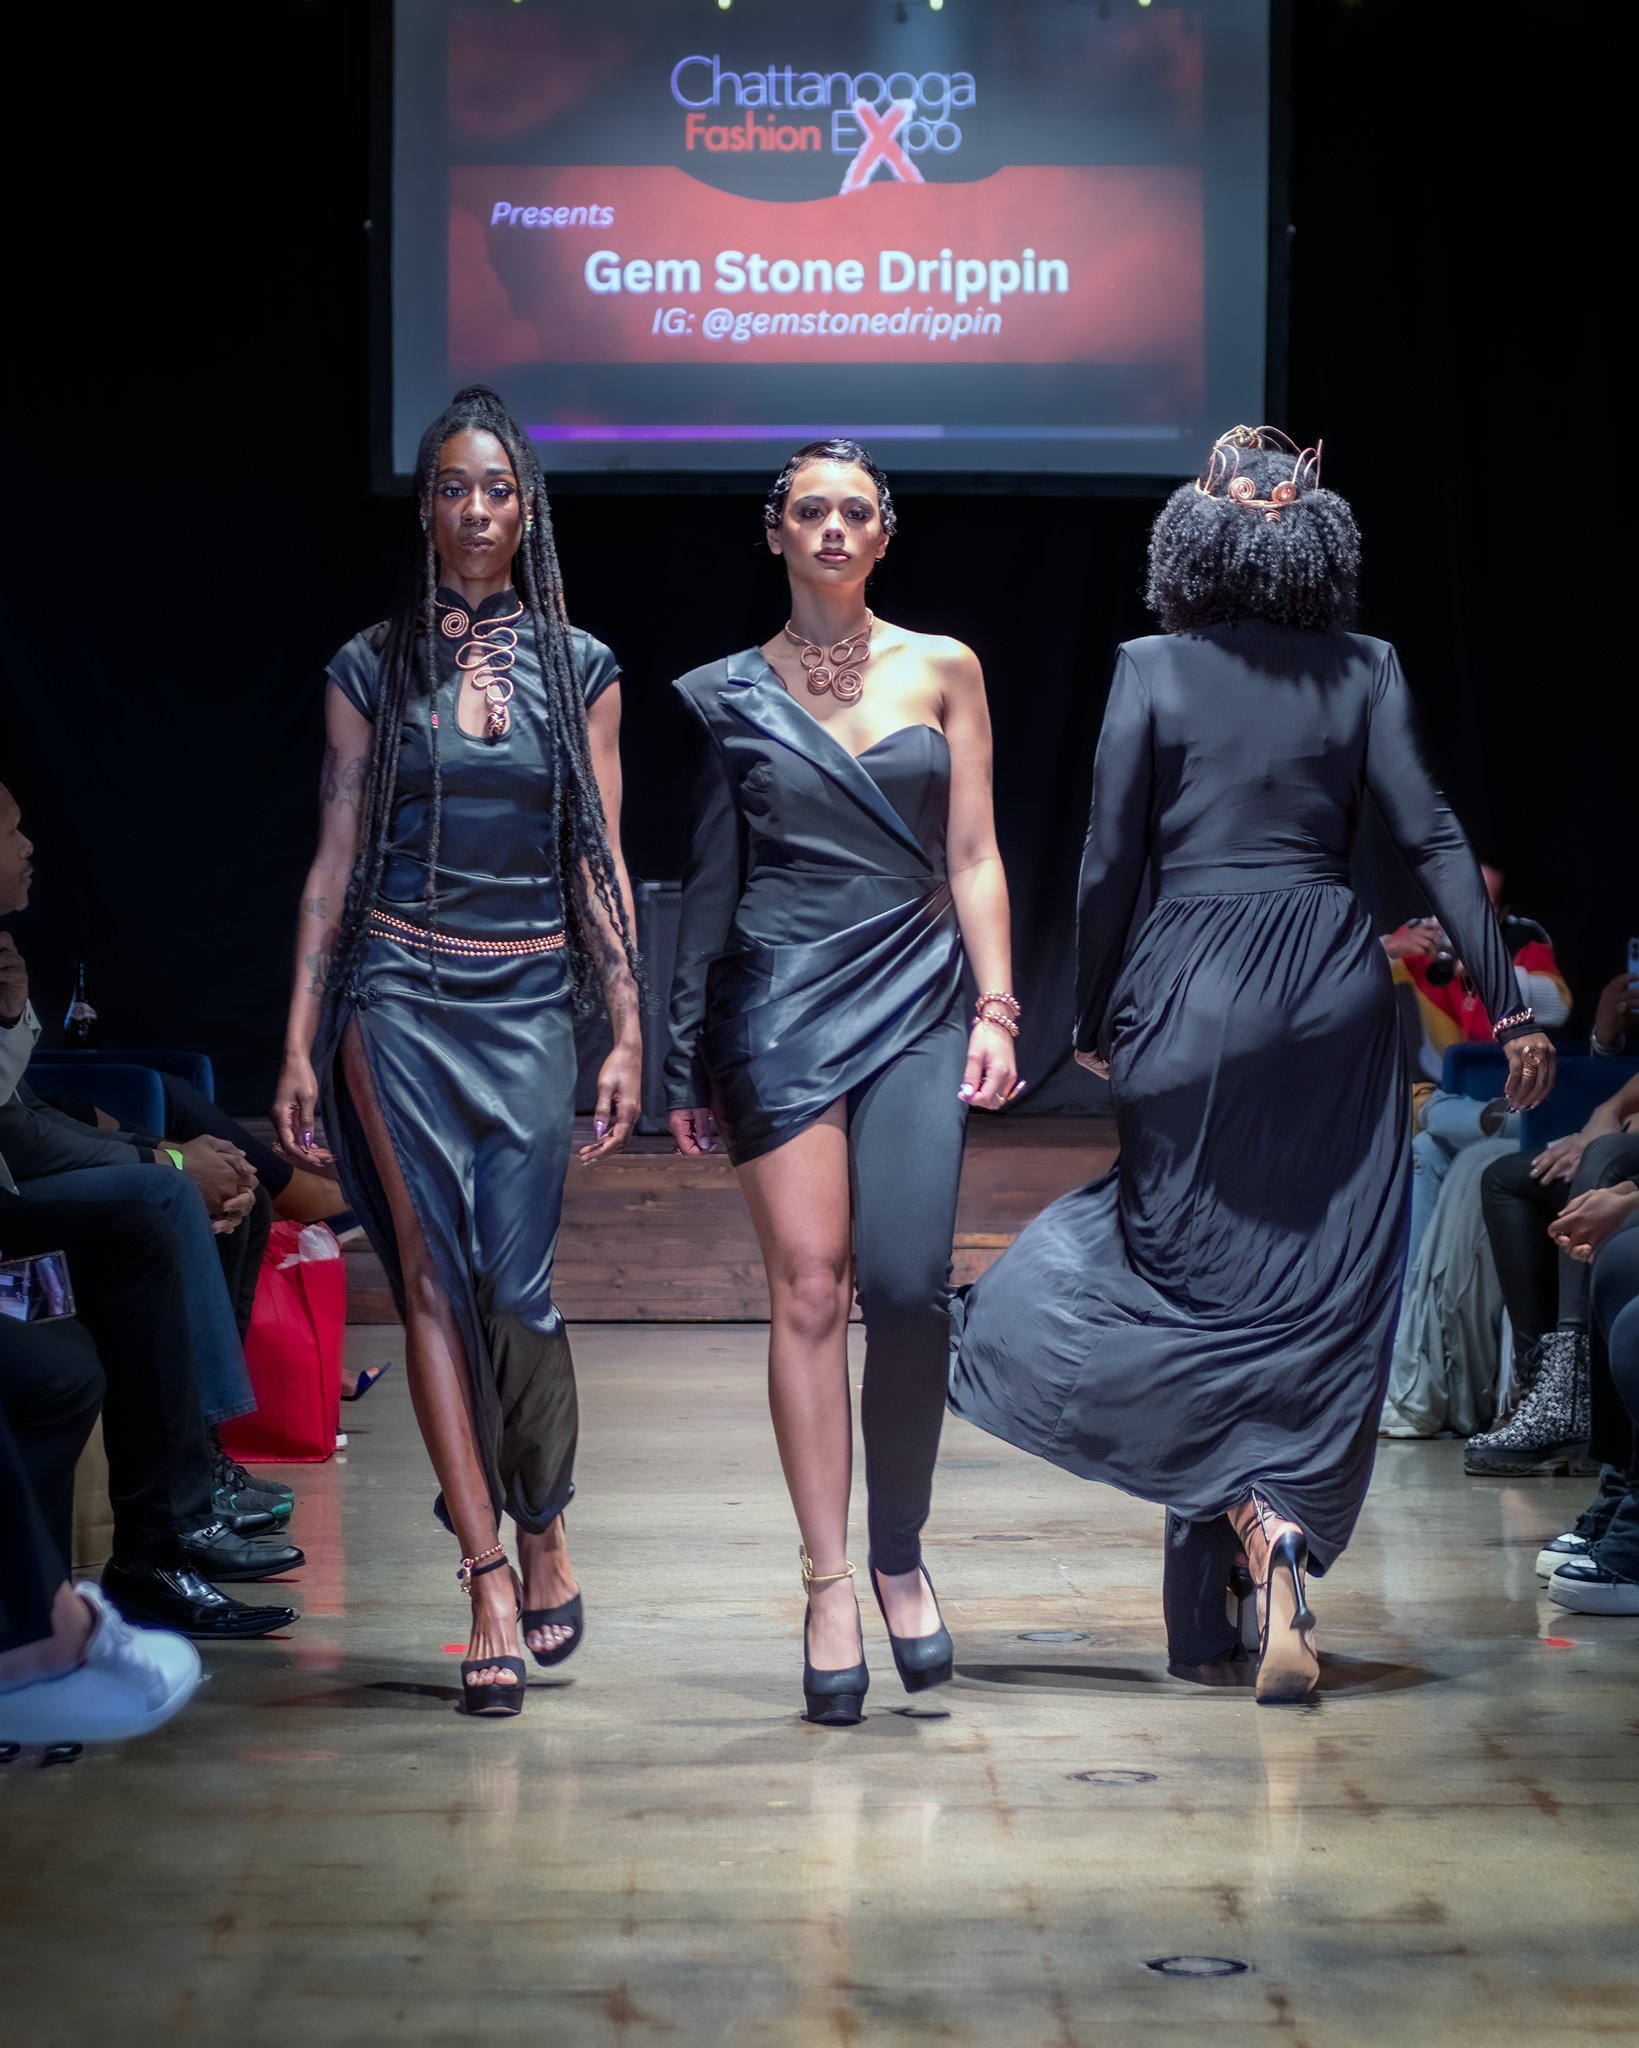 Designer Gem Stone Drippin- Models Brittany Moss and Bianca Bradshaw- Photo by David Tedder.jpg